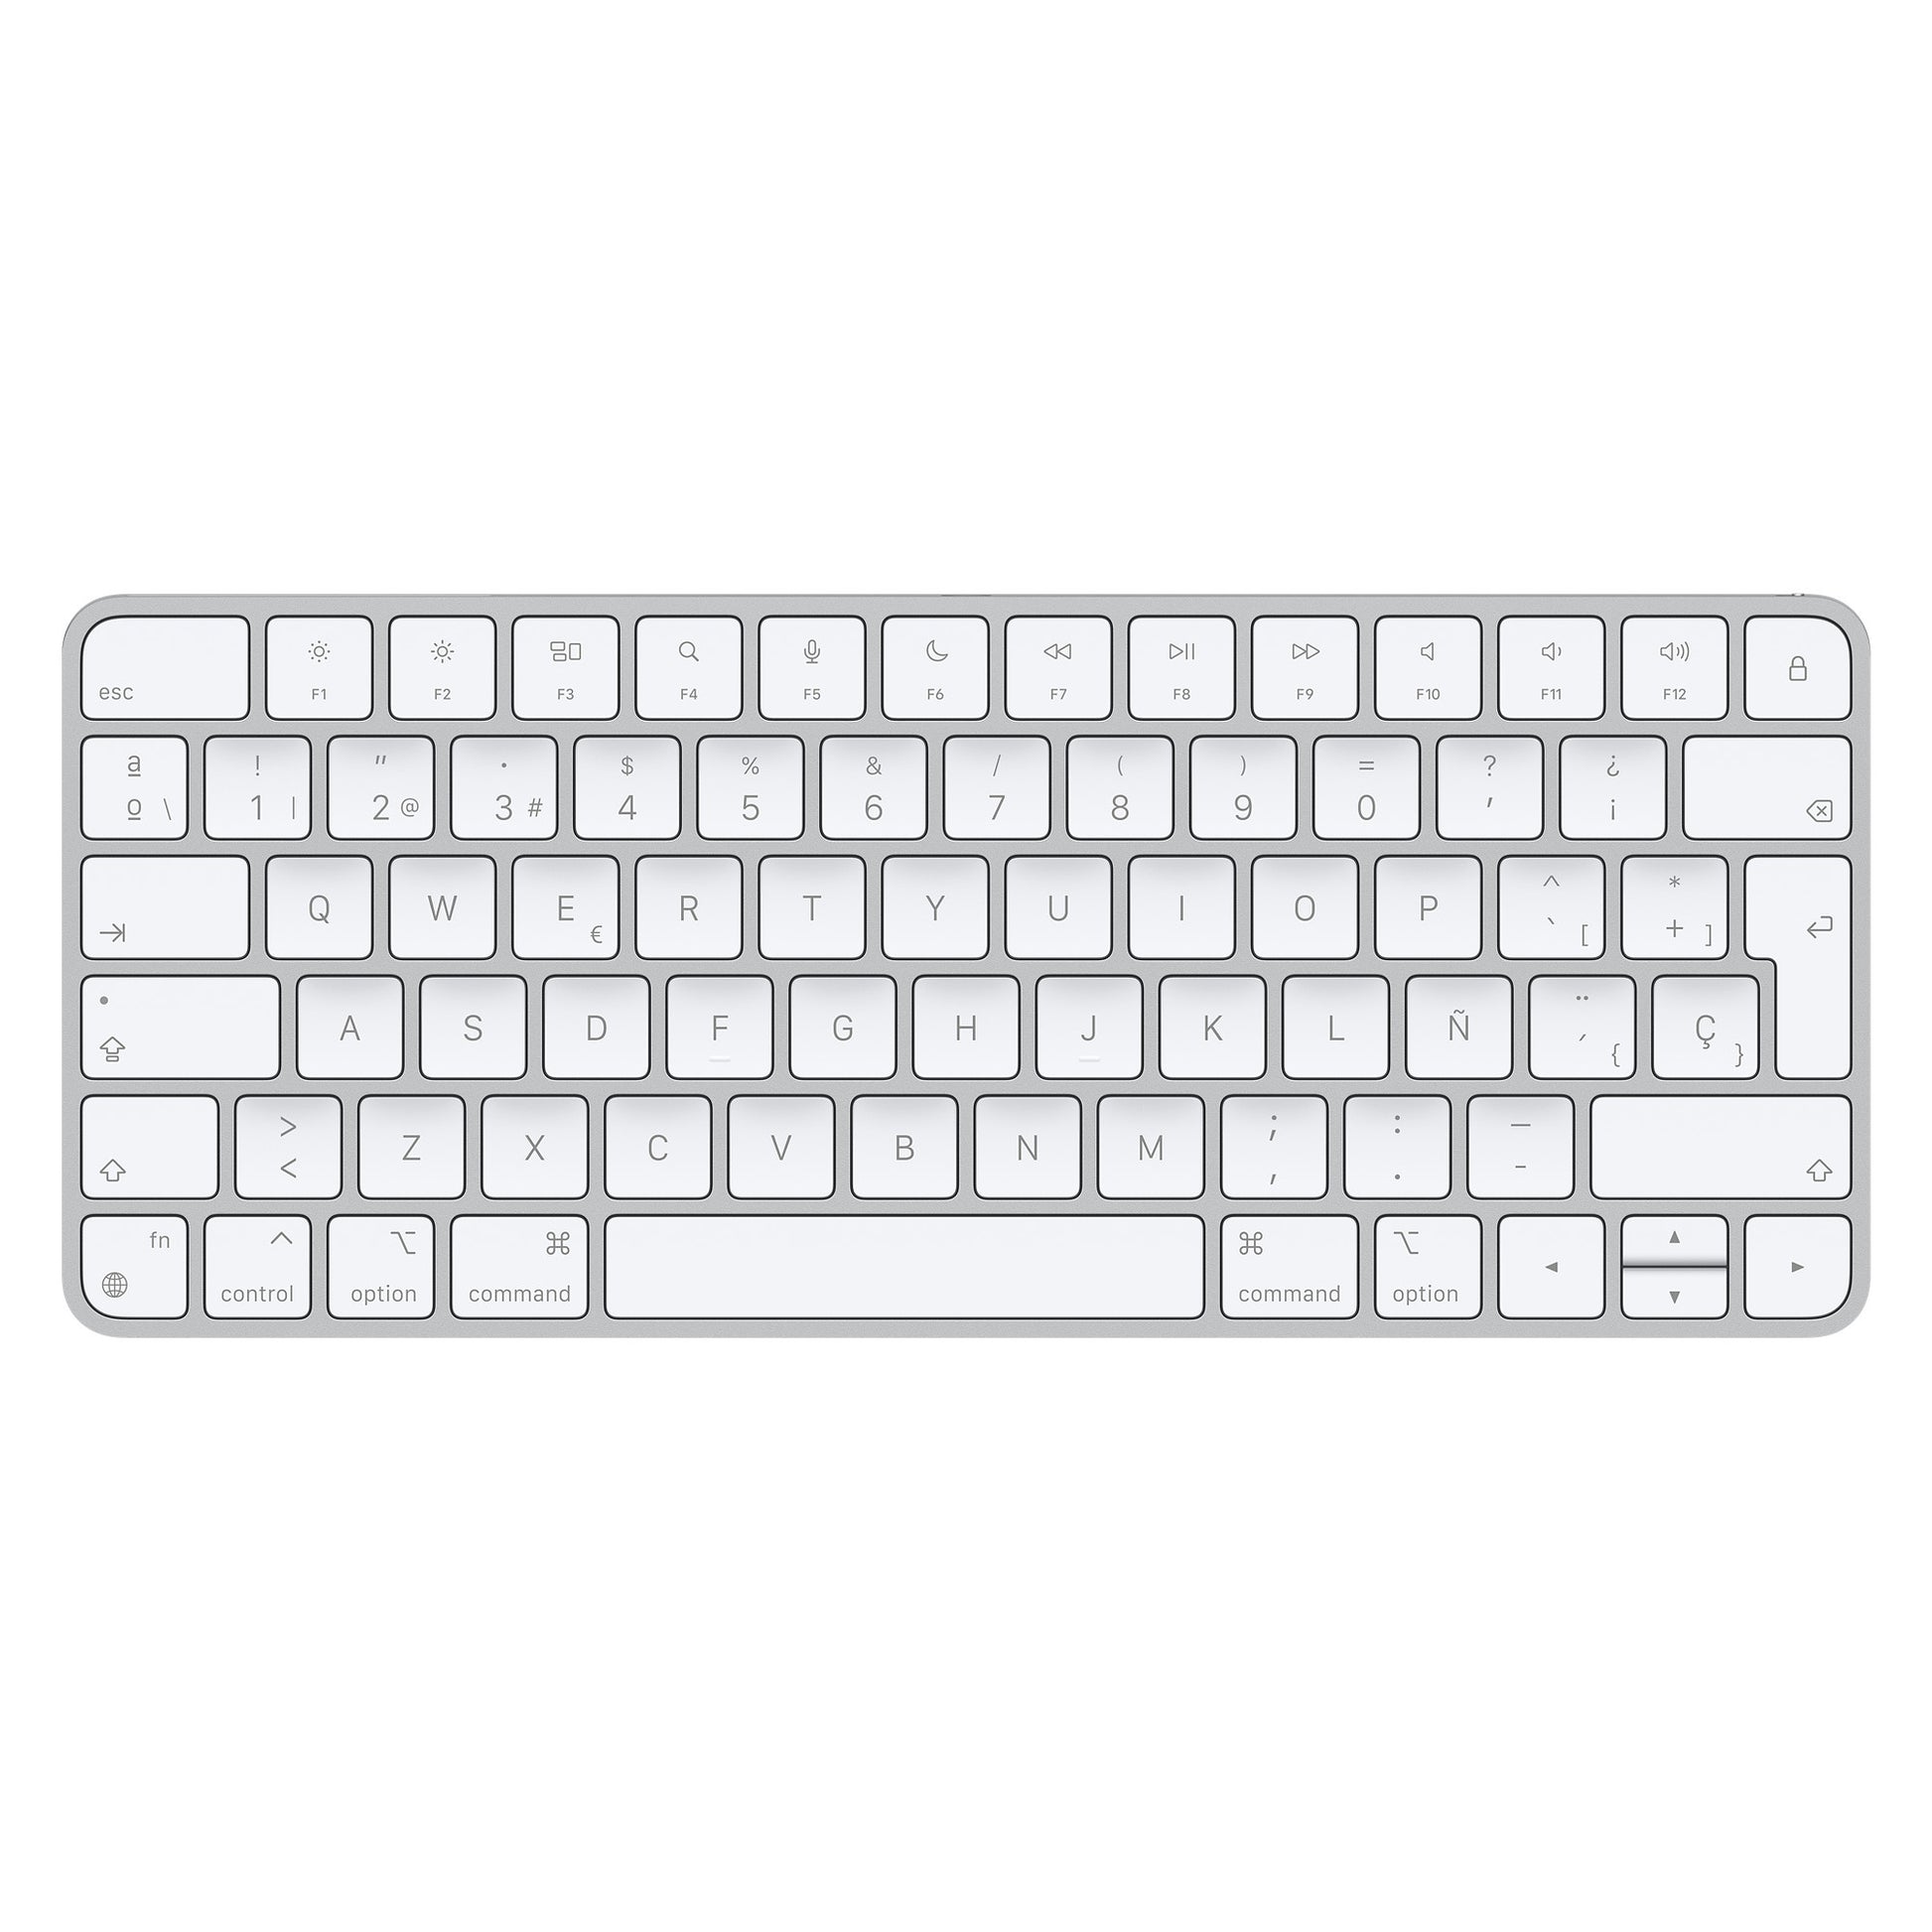 Apple Magic Keyboard - Silber - Slowakei